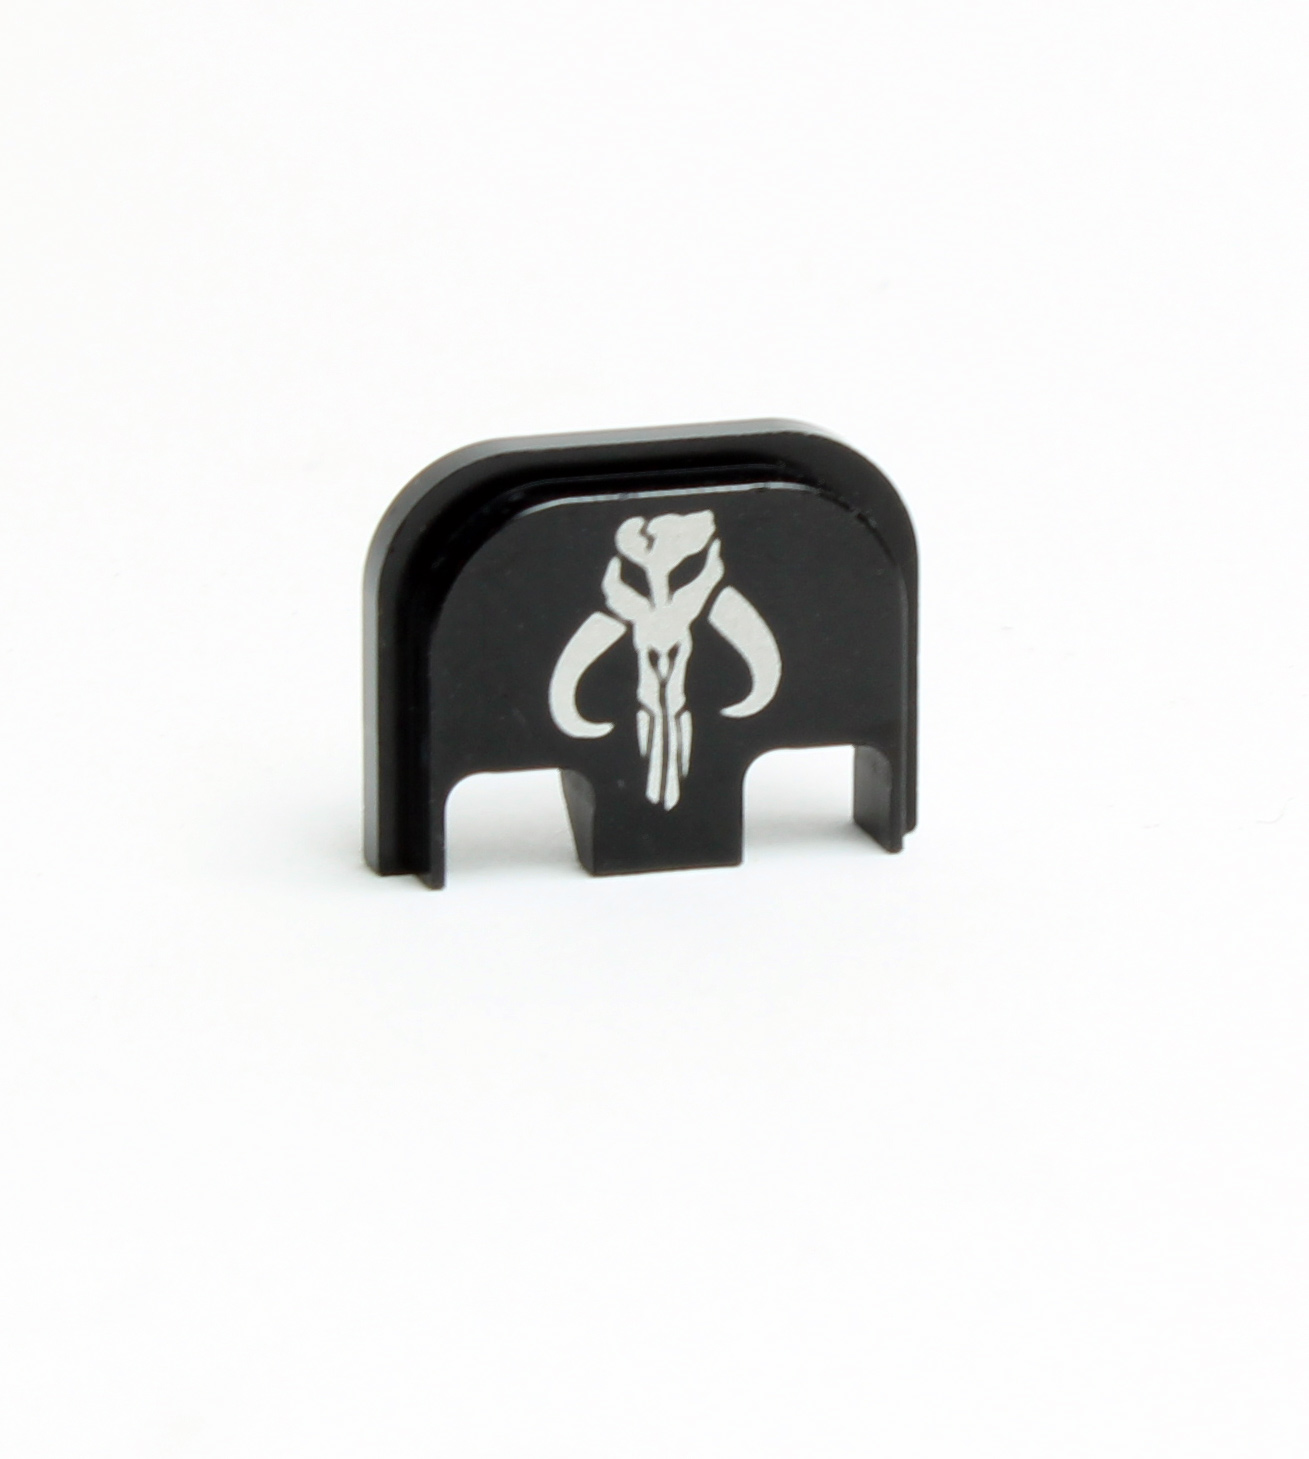 Glock Backplate Cerakote Custom mit eigenem Design